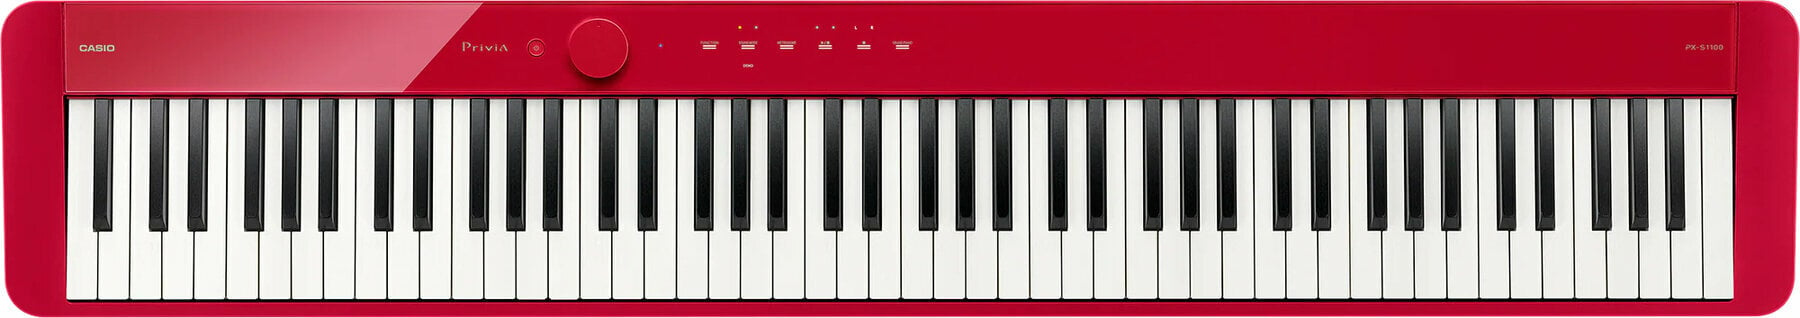 Piano de scène Casio PX S1100  Piano de scène